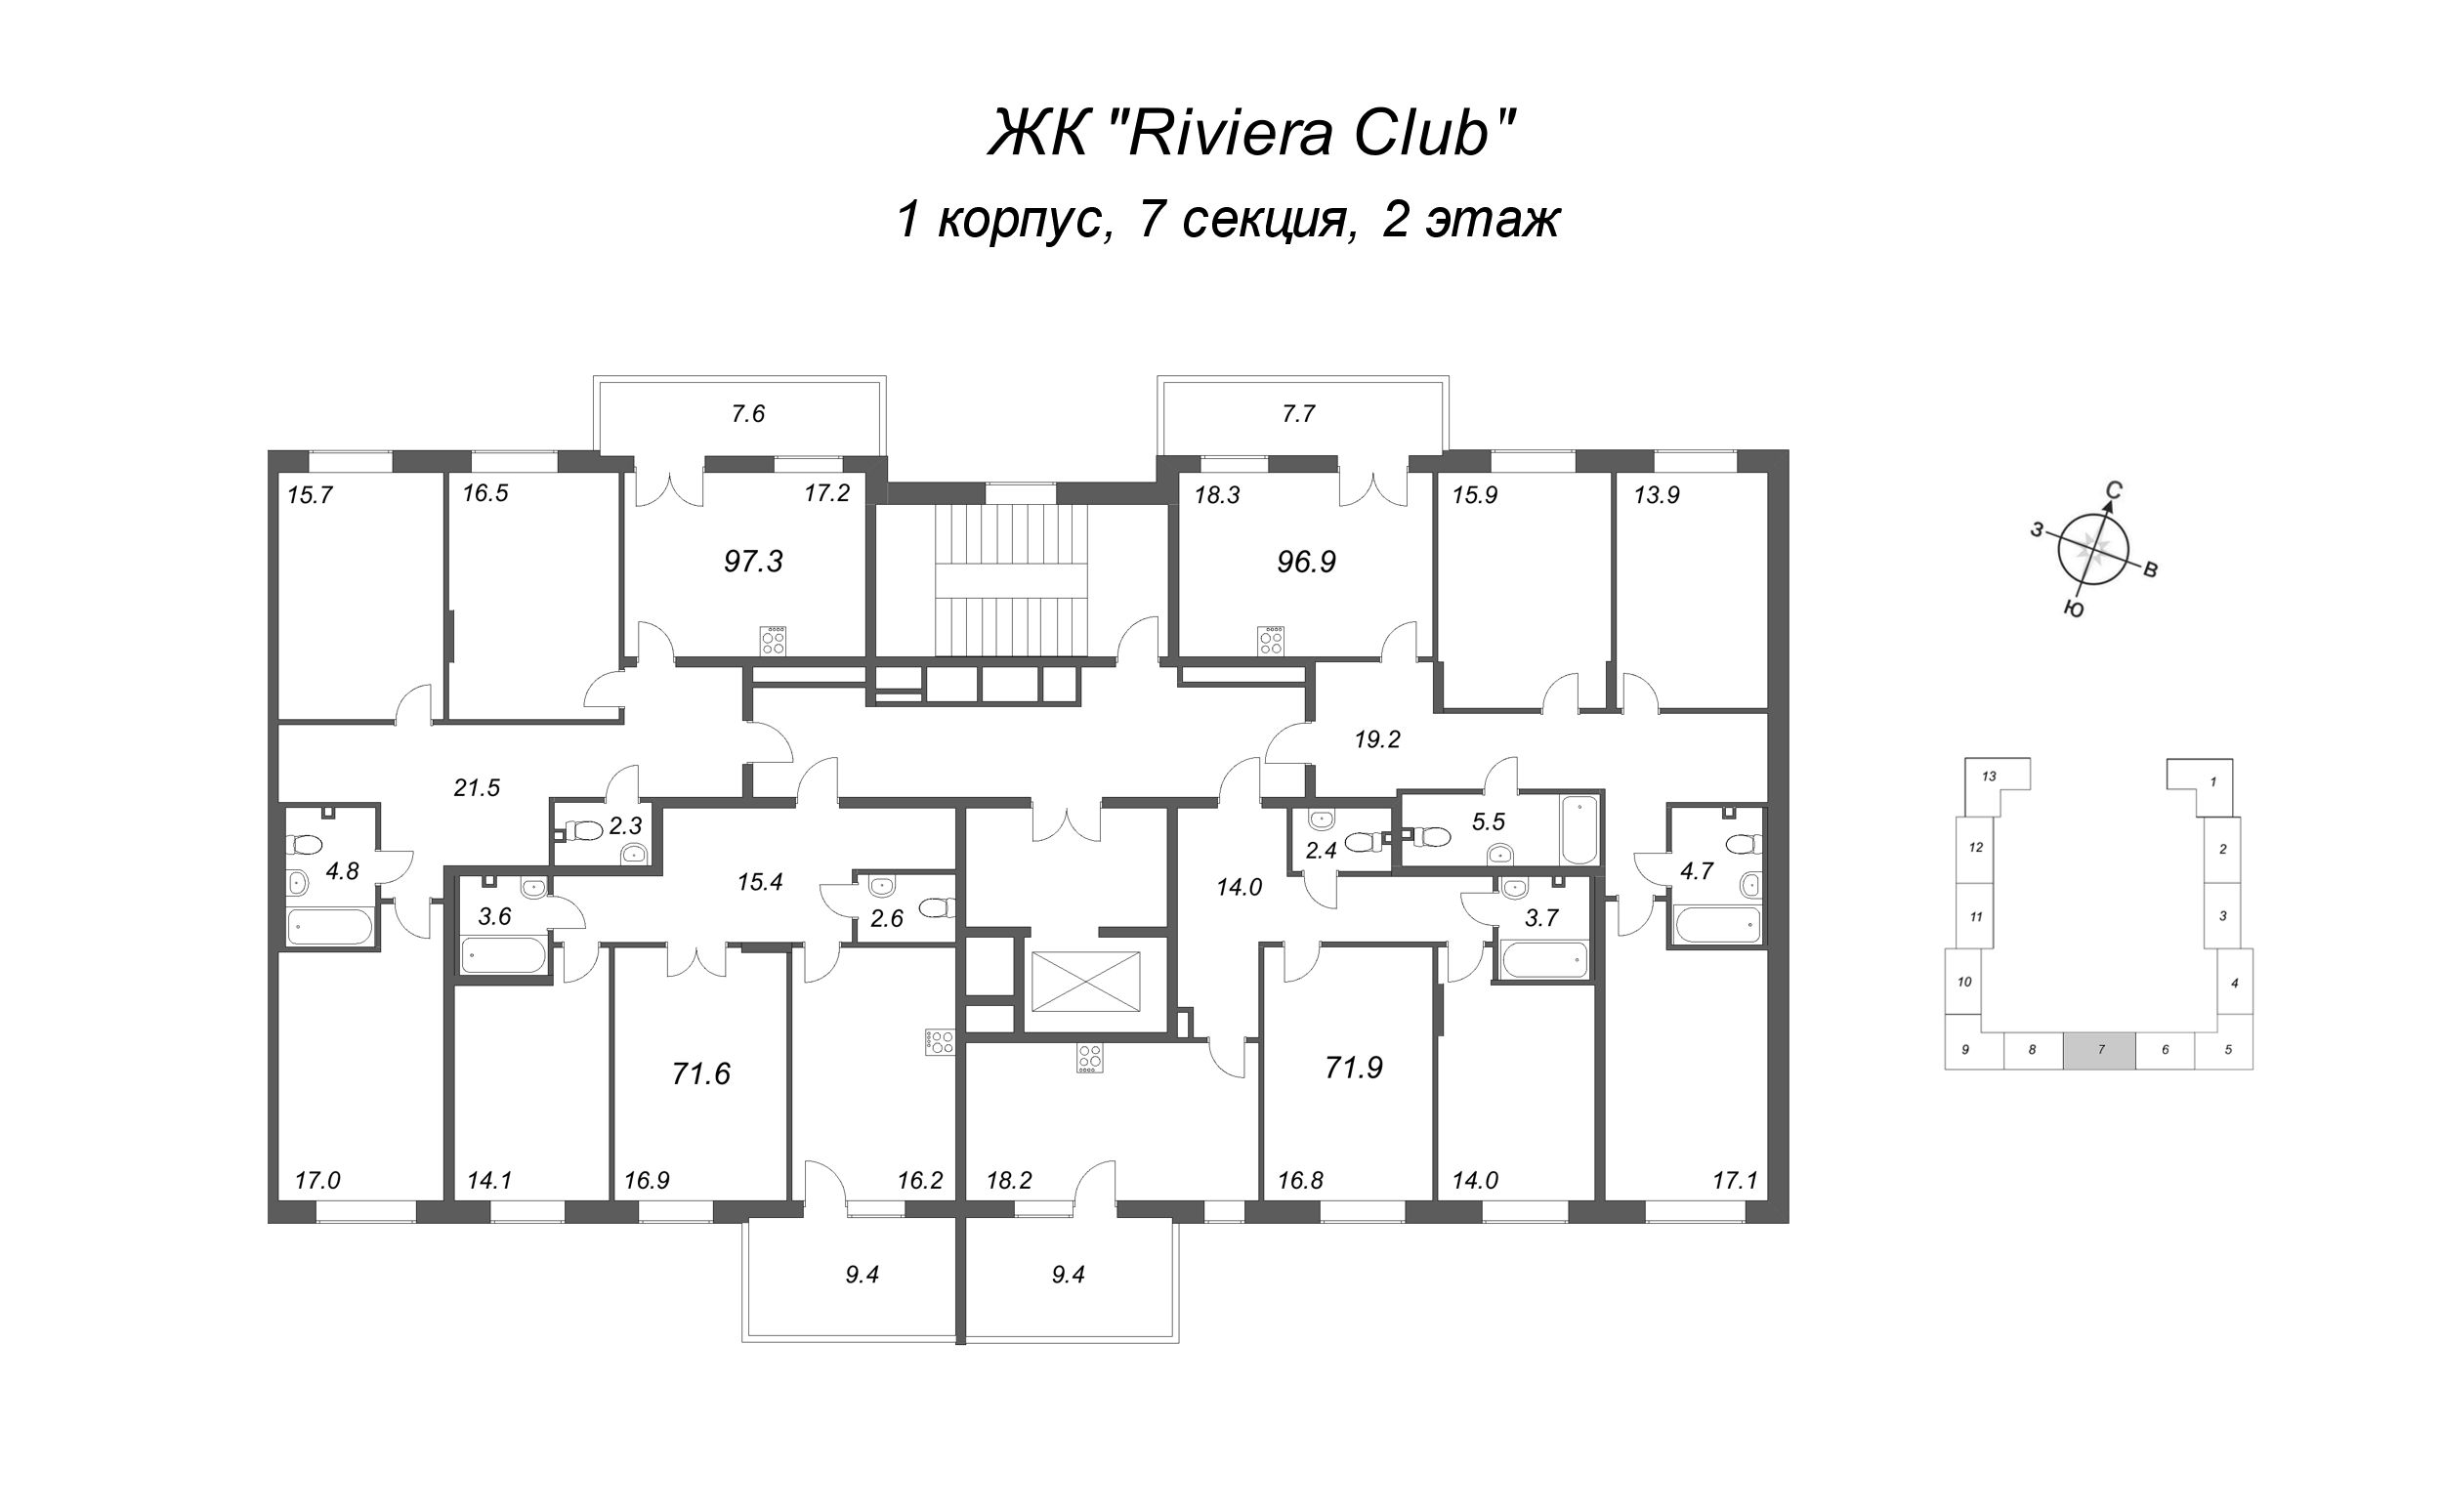 4-комнатная (Евро) квартира, 96.9 м² - планировка этажа